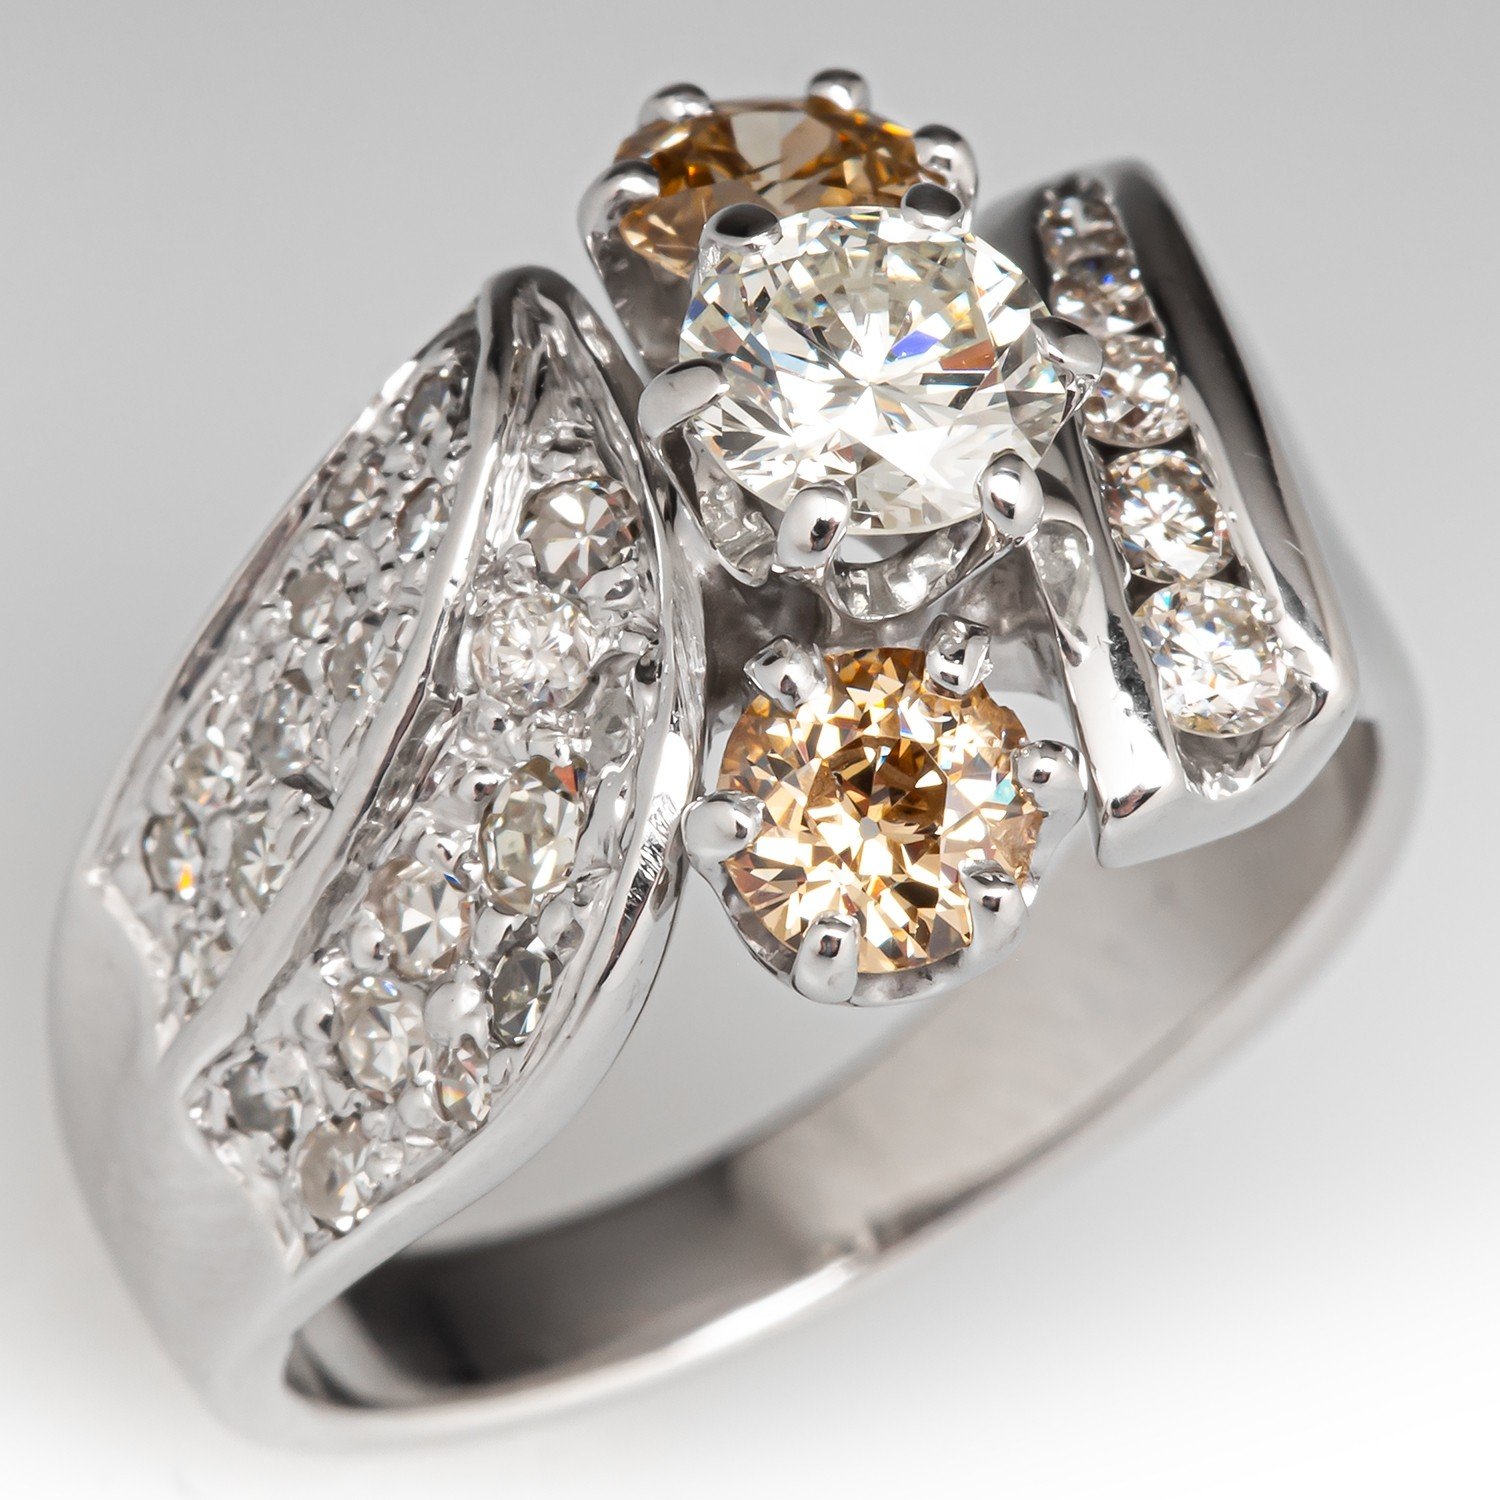 Shree one 10011 Steel Diamond Ring Price in India - Buy Shree one 10011  Steel Diamond Ring Online at Best Prices in India | Flipkart.com